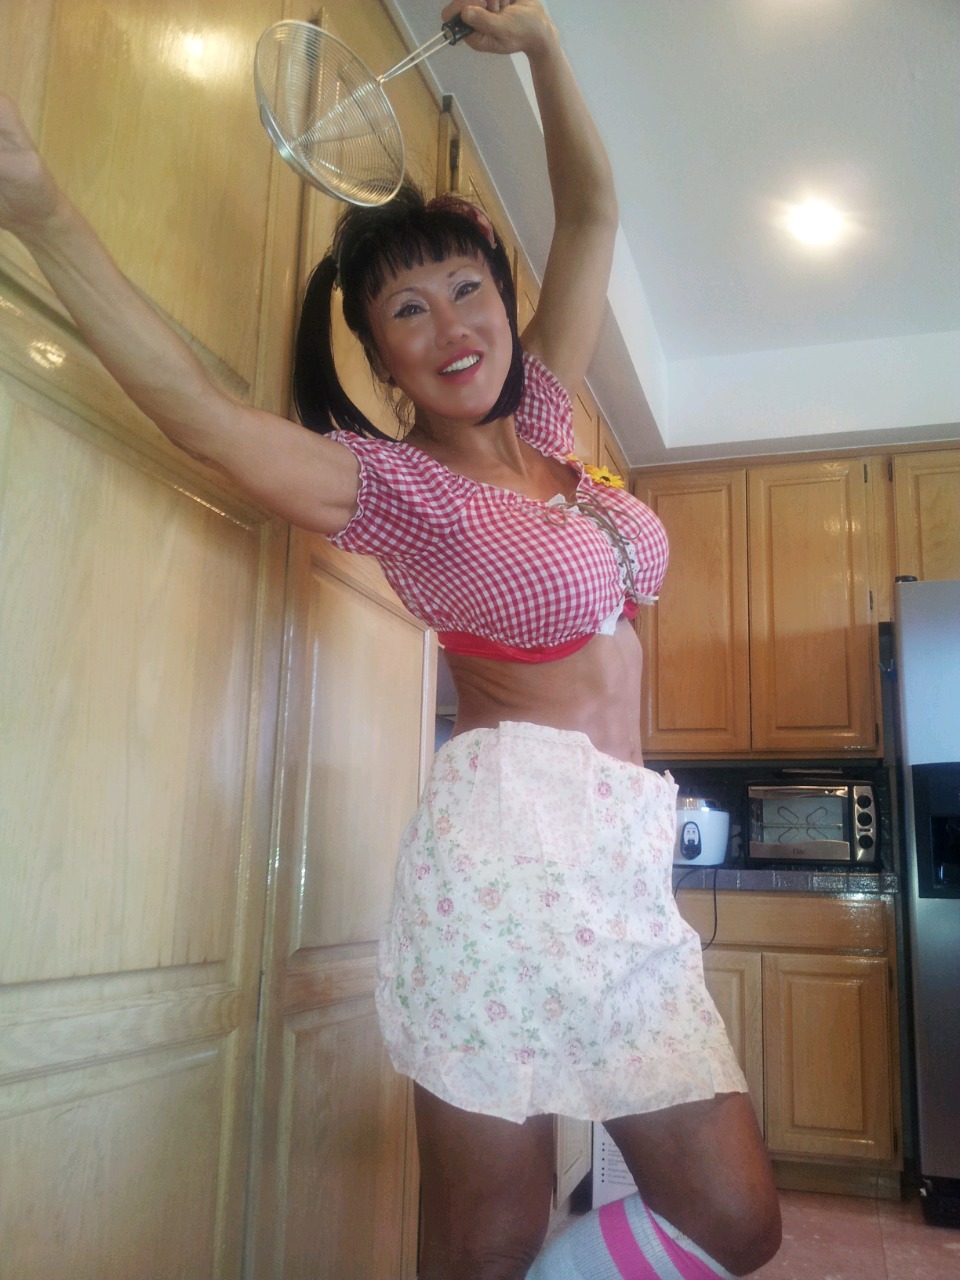 Cheryl Ling as Asian Cajun Chef